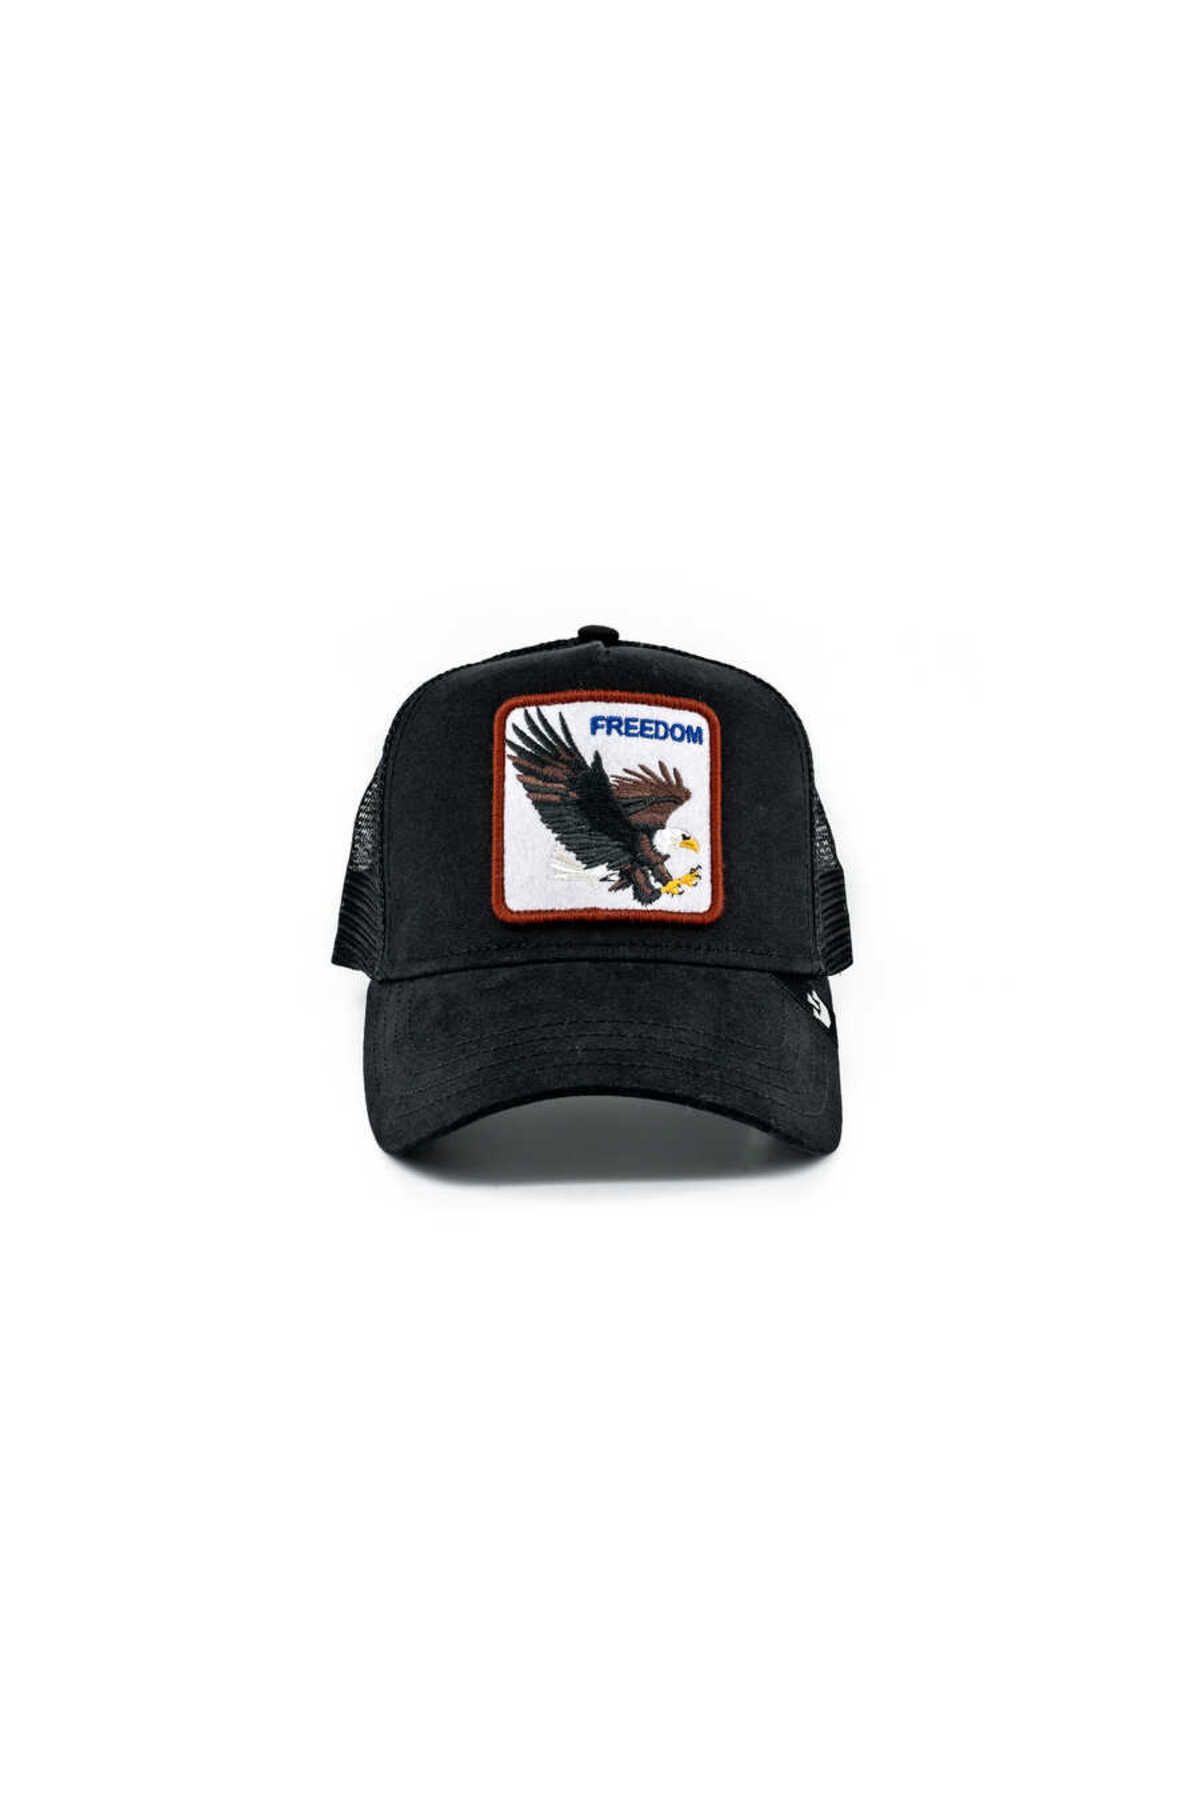 Goorin Bros Freedom (KARTAL FİGÜRLÜ) Siyah Şapka